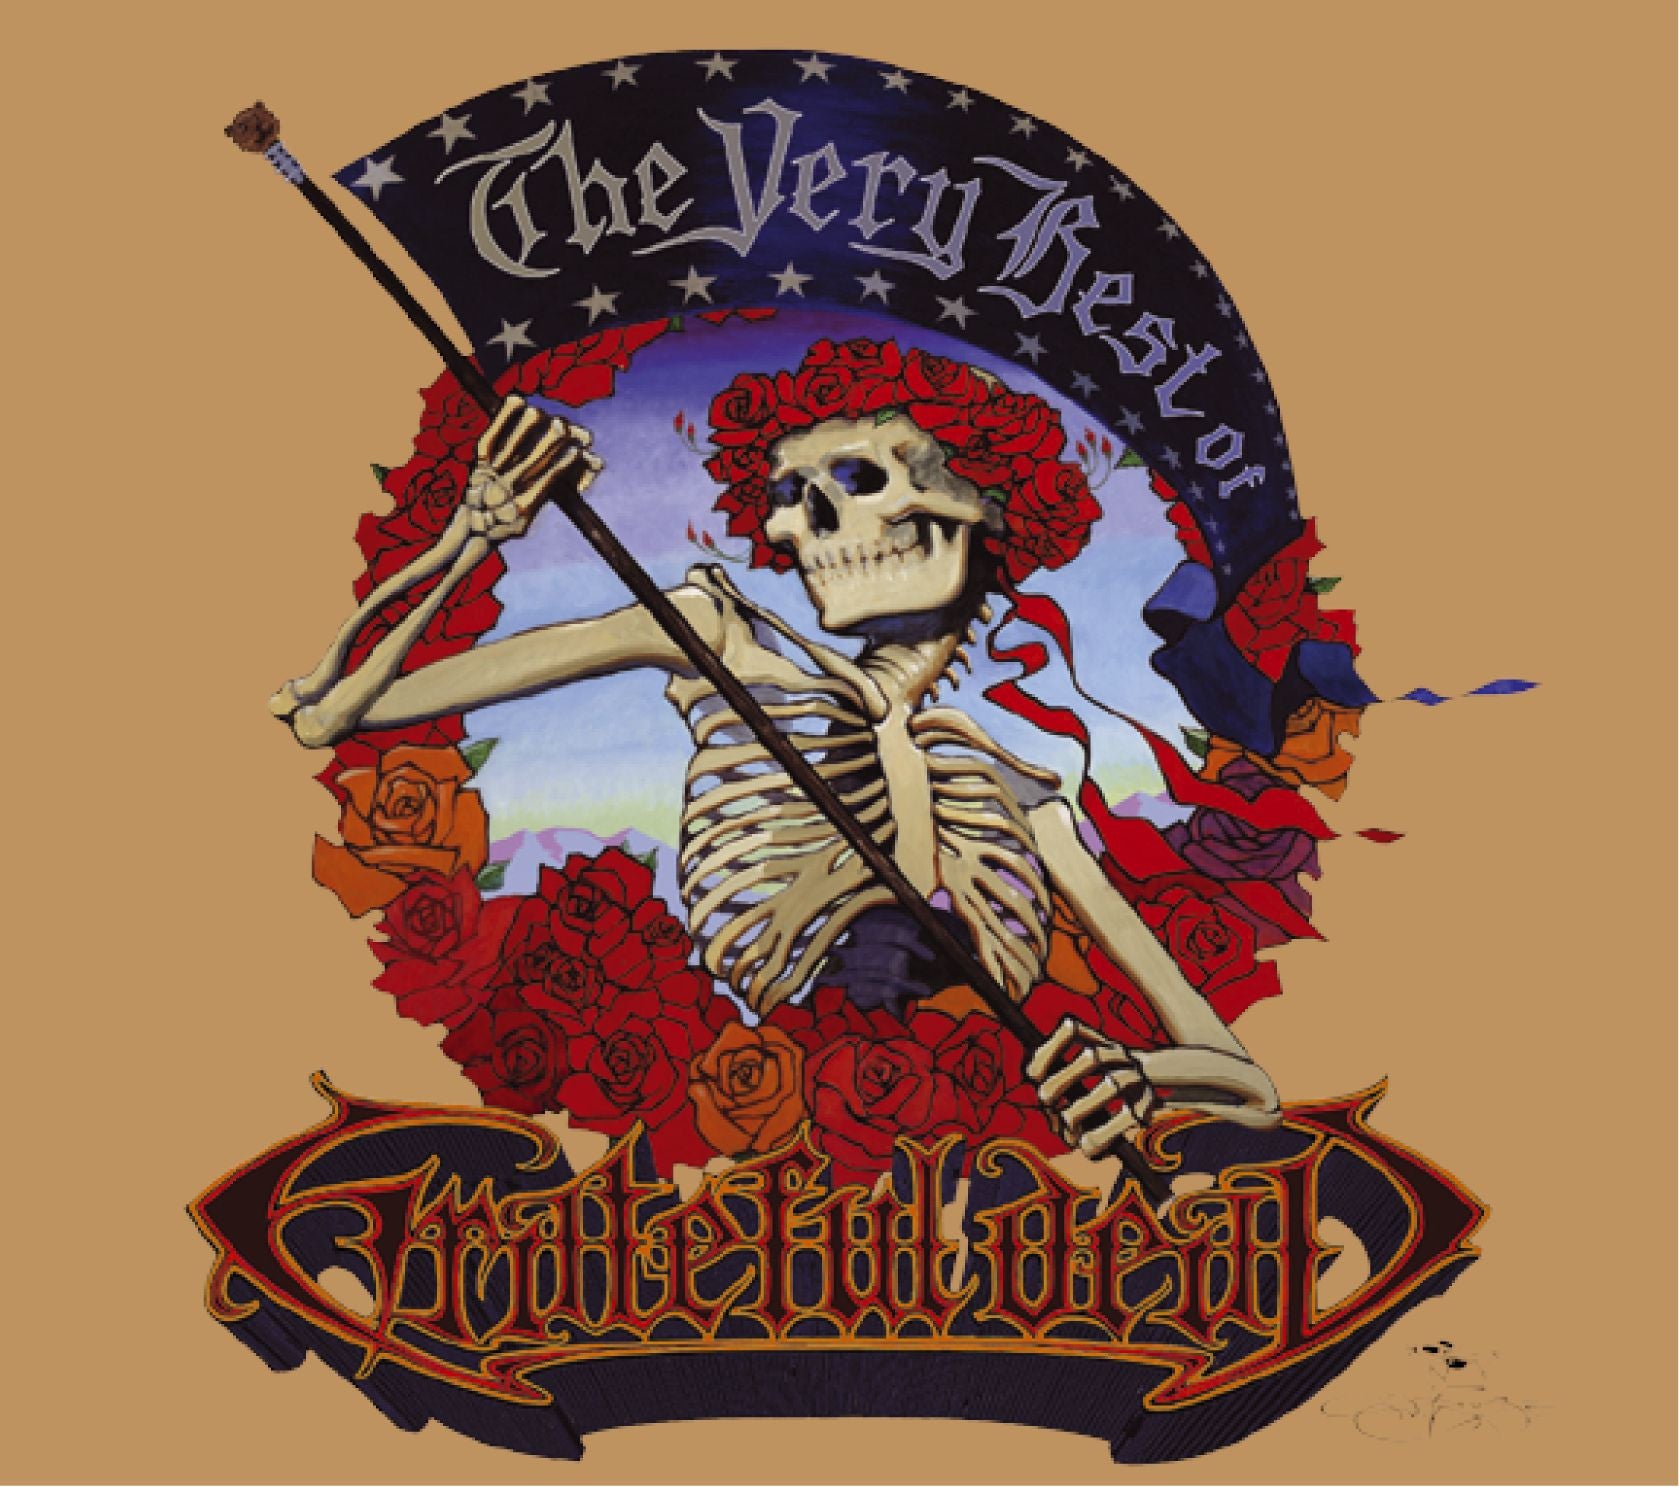 Grateful Dead - The Very Best Of CD